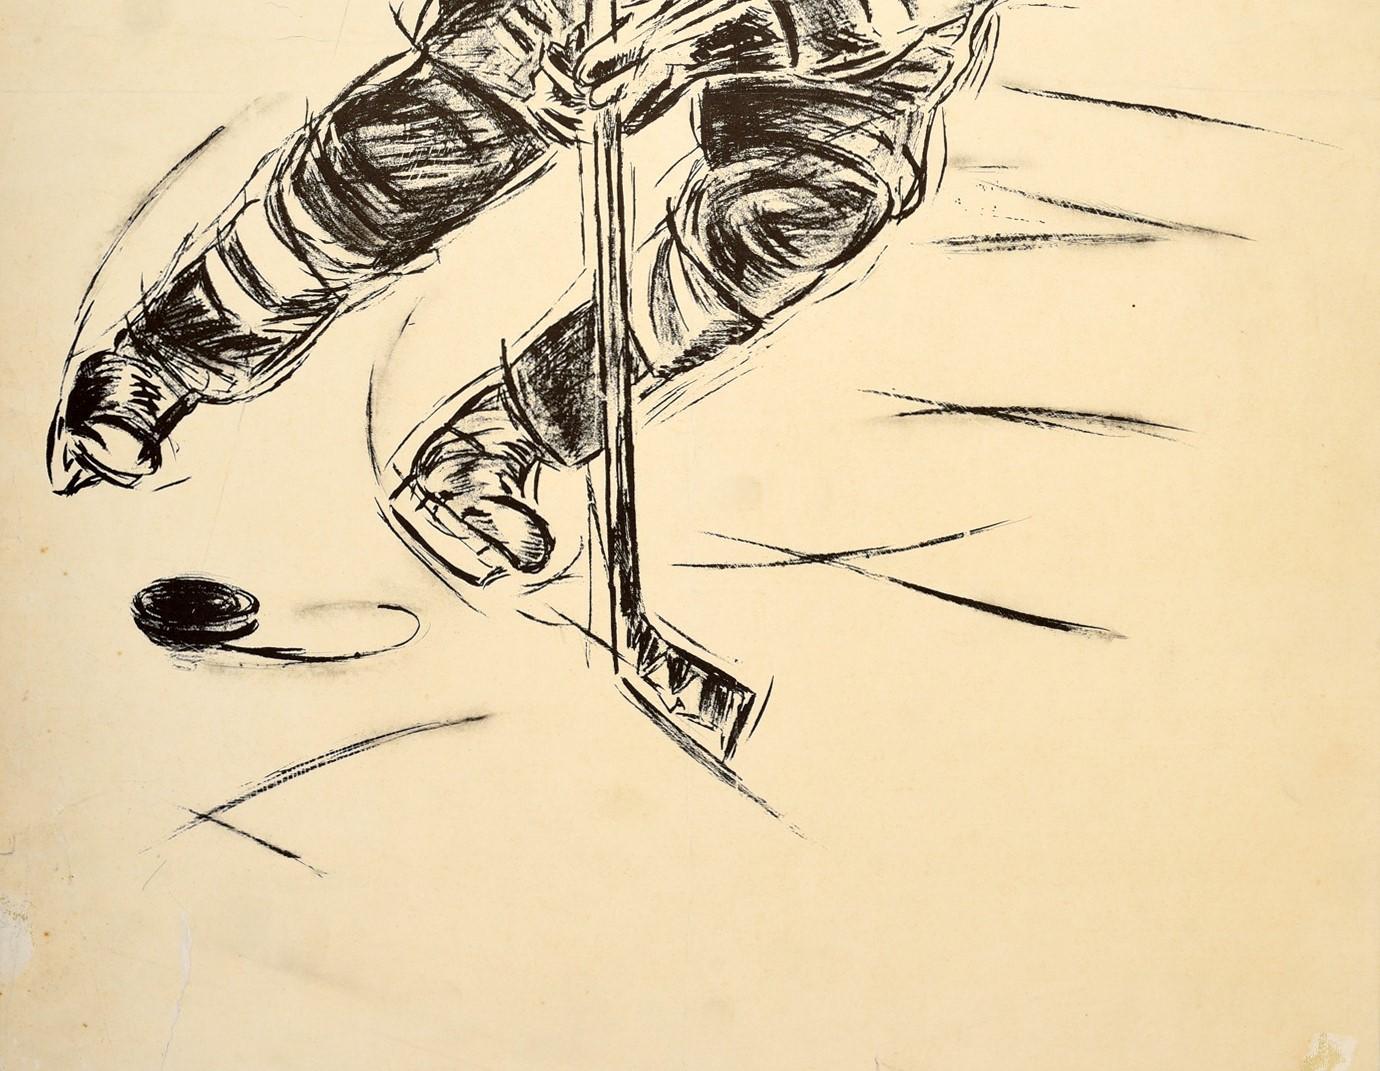 vintage hockey prints